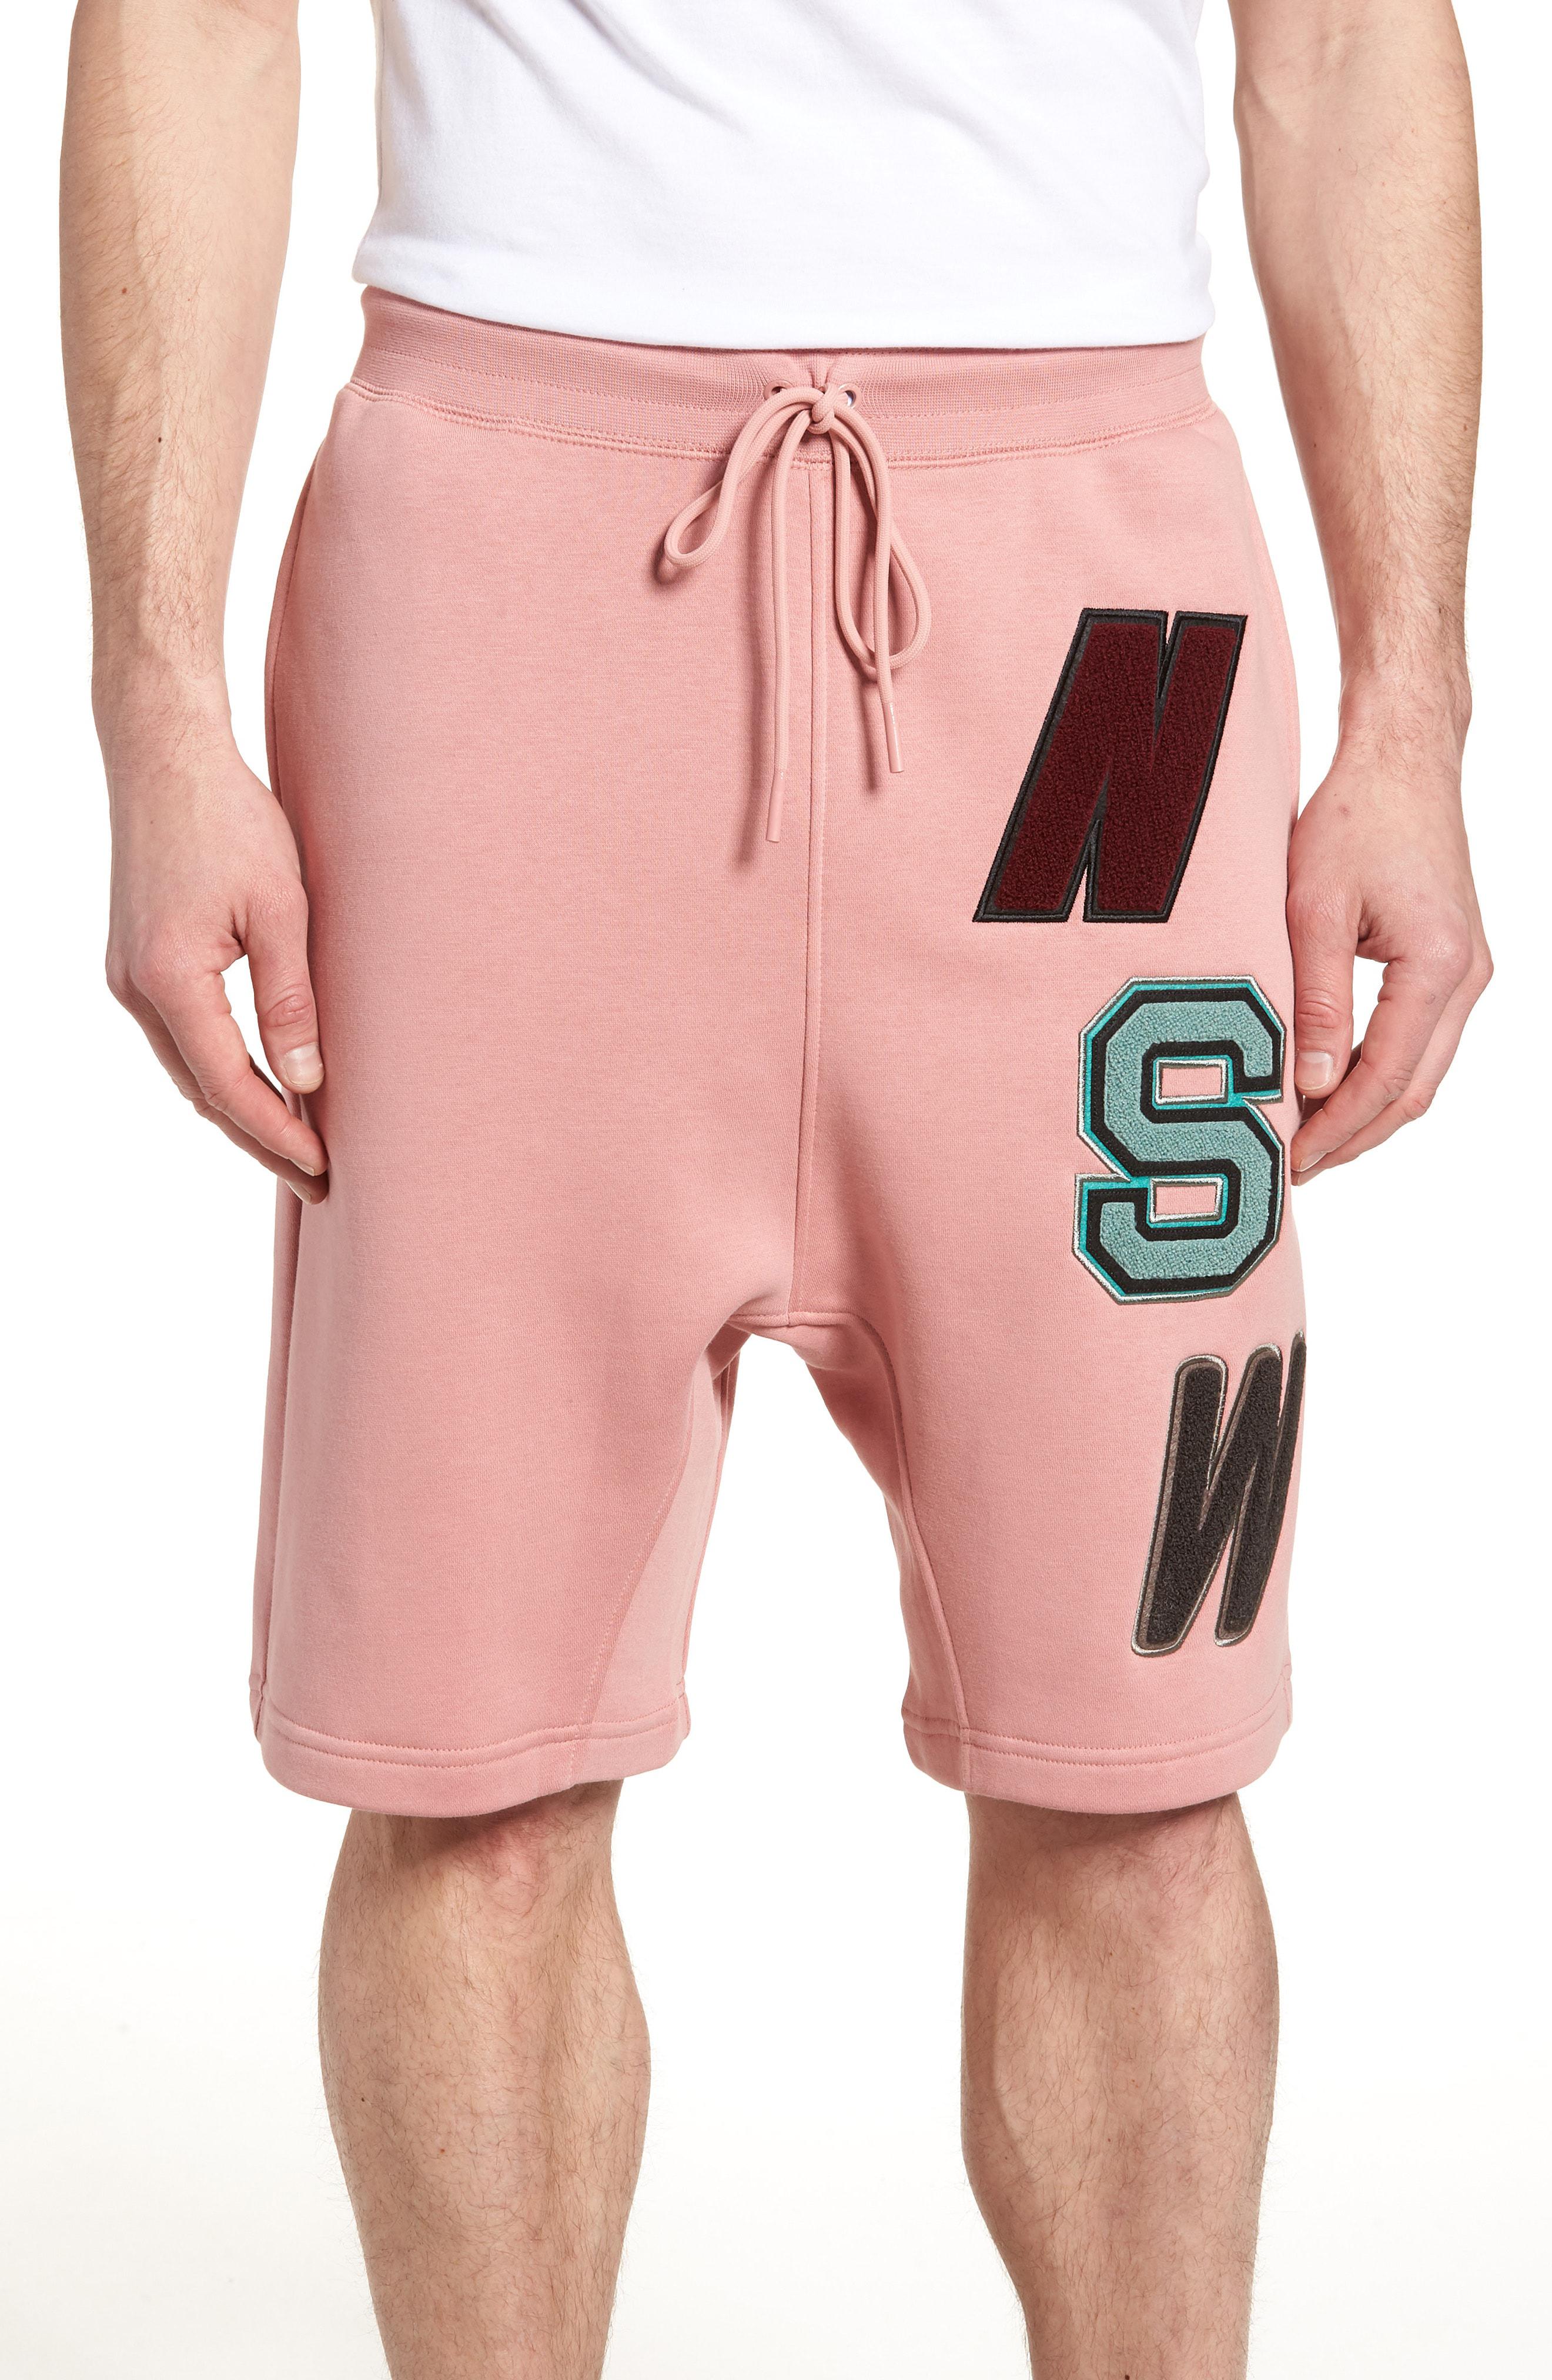 nike fleece shorts pink